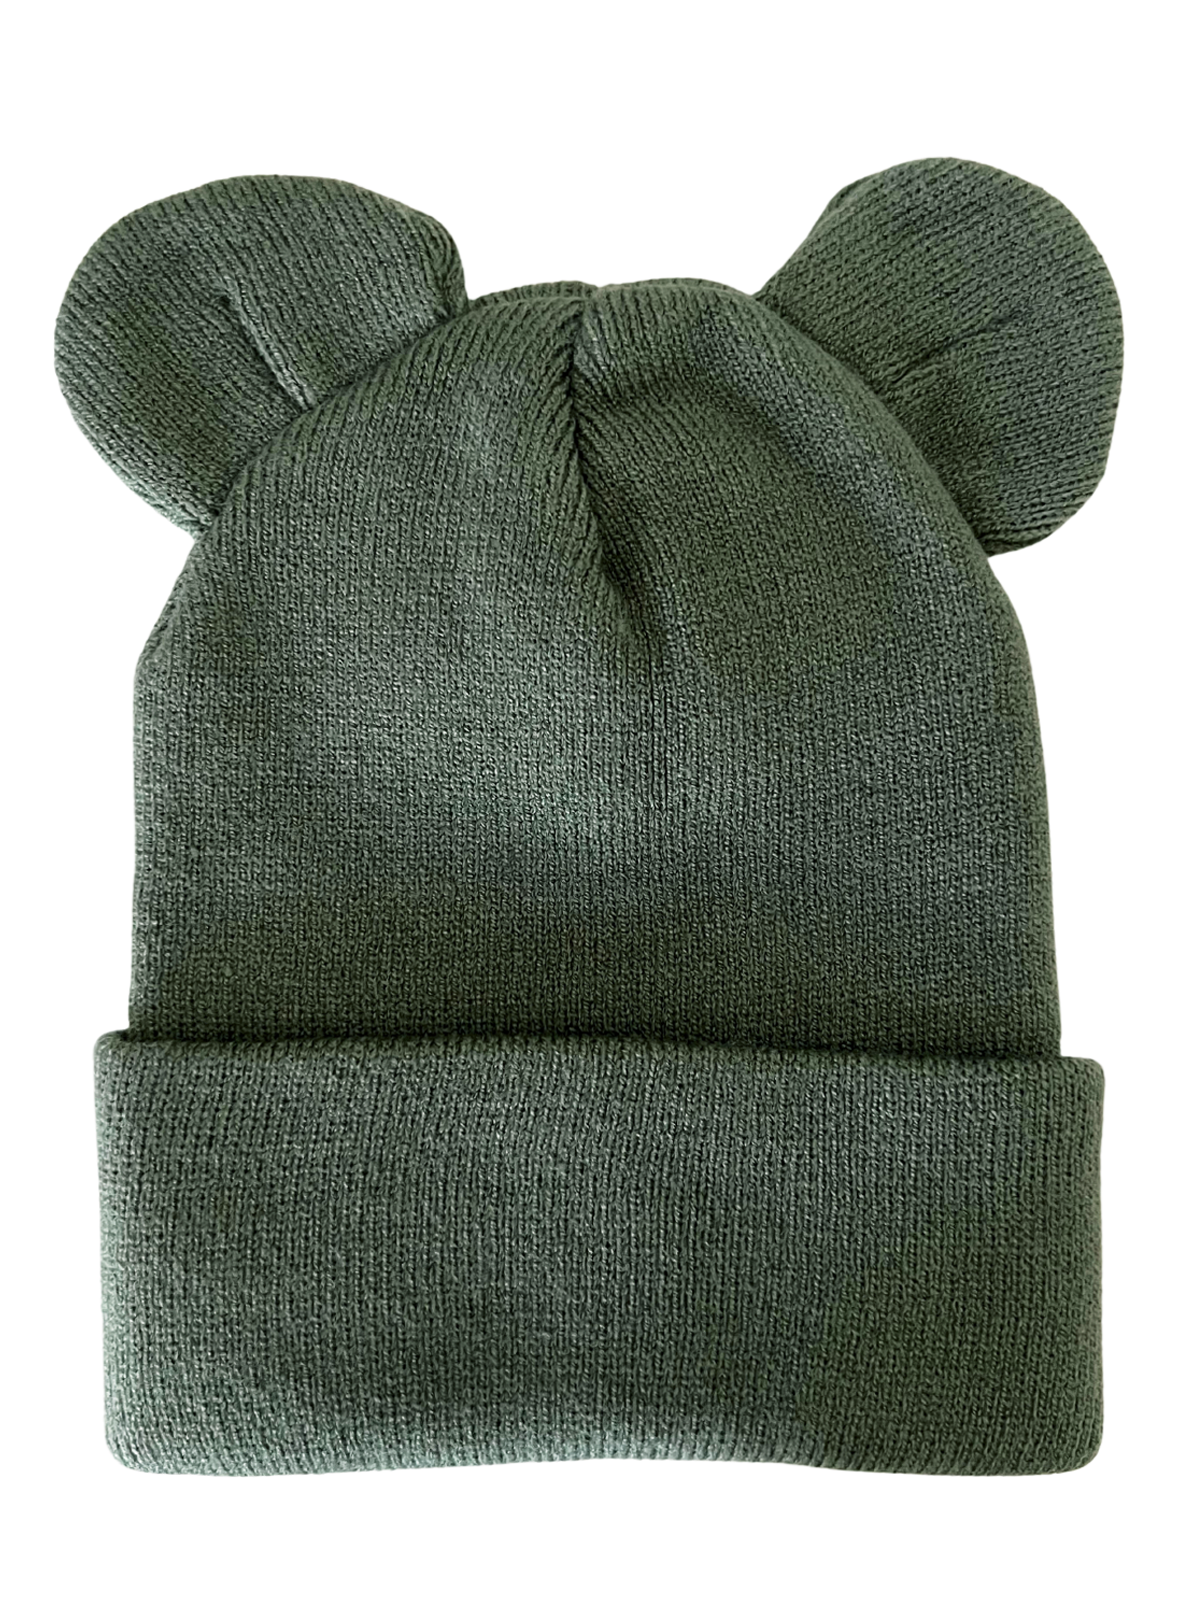 Baby's First Hat, Fern Bear